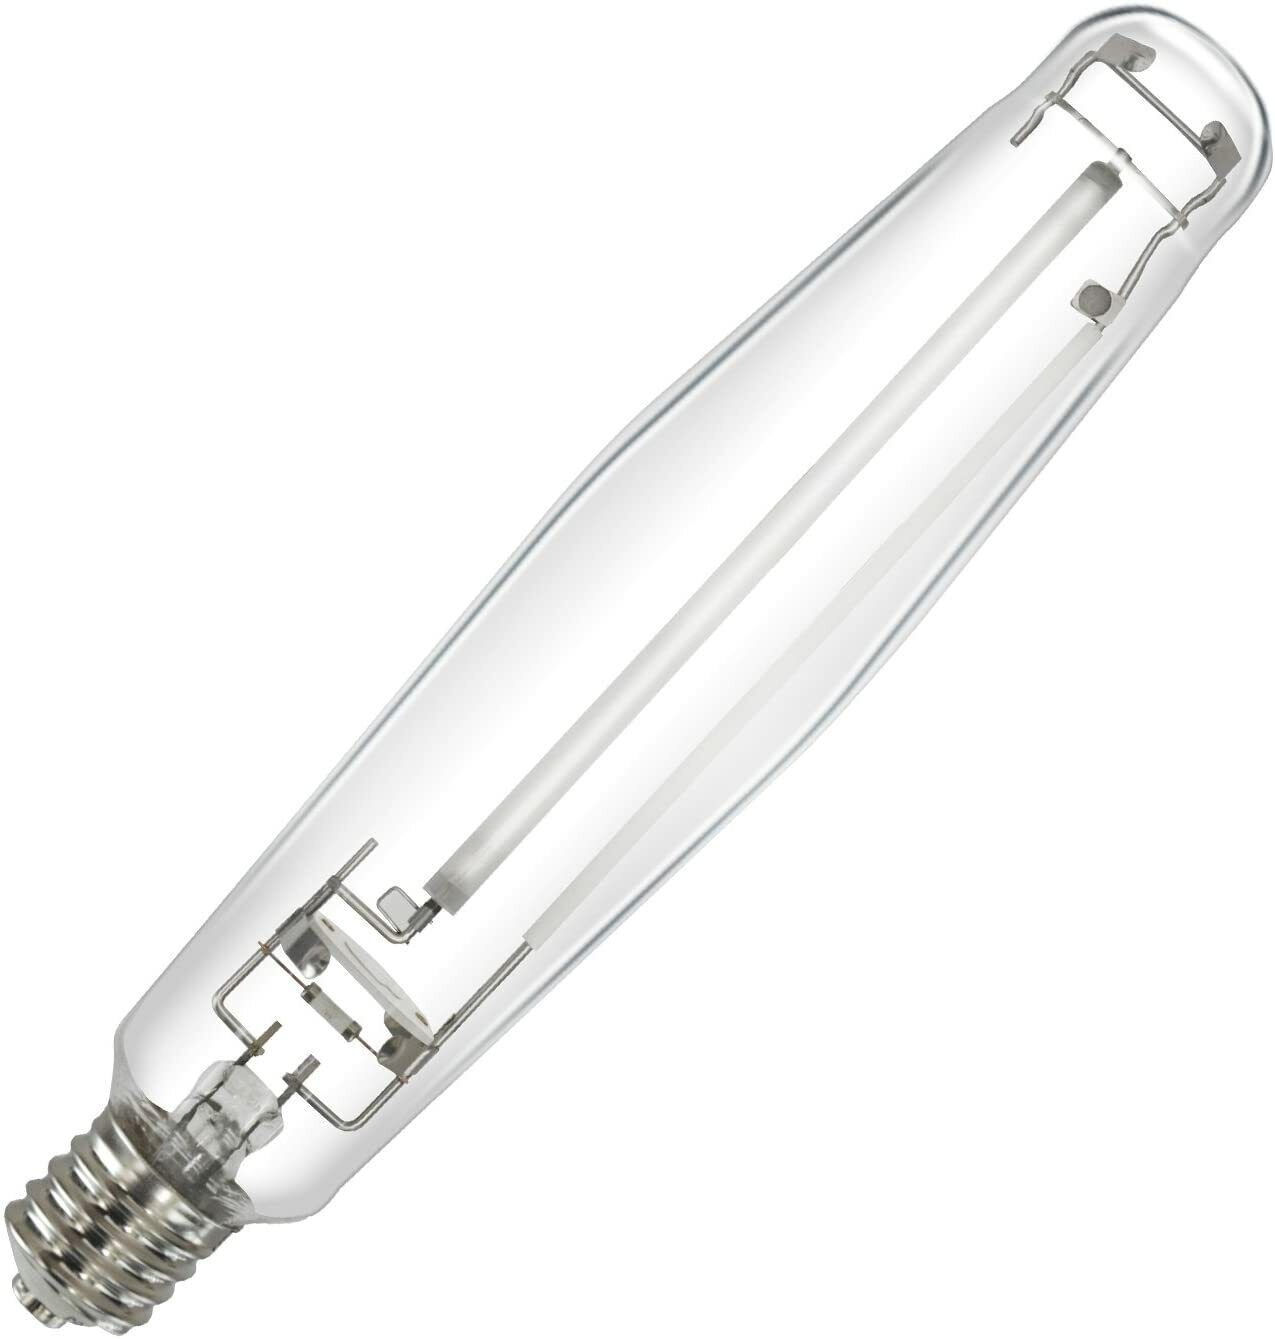 iPower 1000 Watt High Pressure Sodium HPS Grow Light Bulb Lamp 1-6 PACK